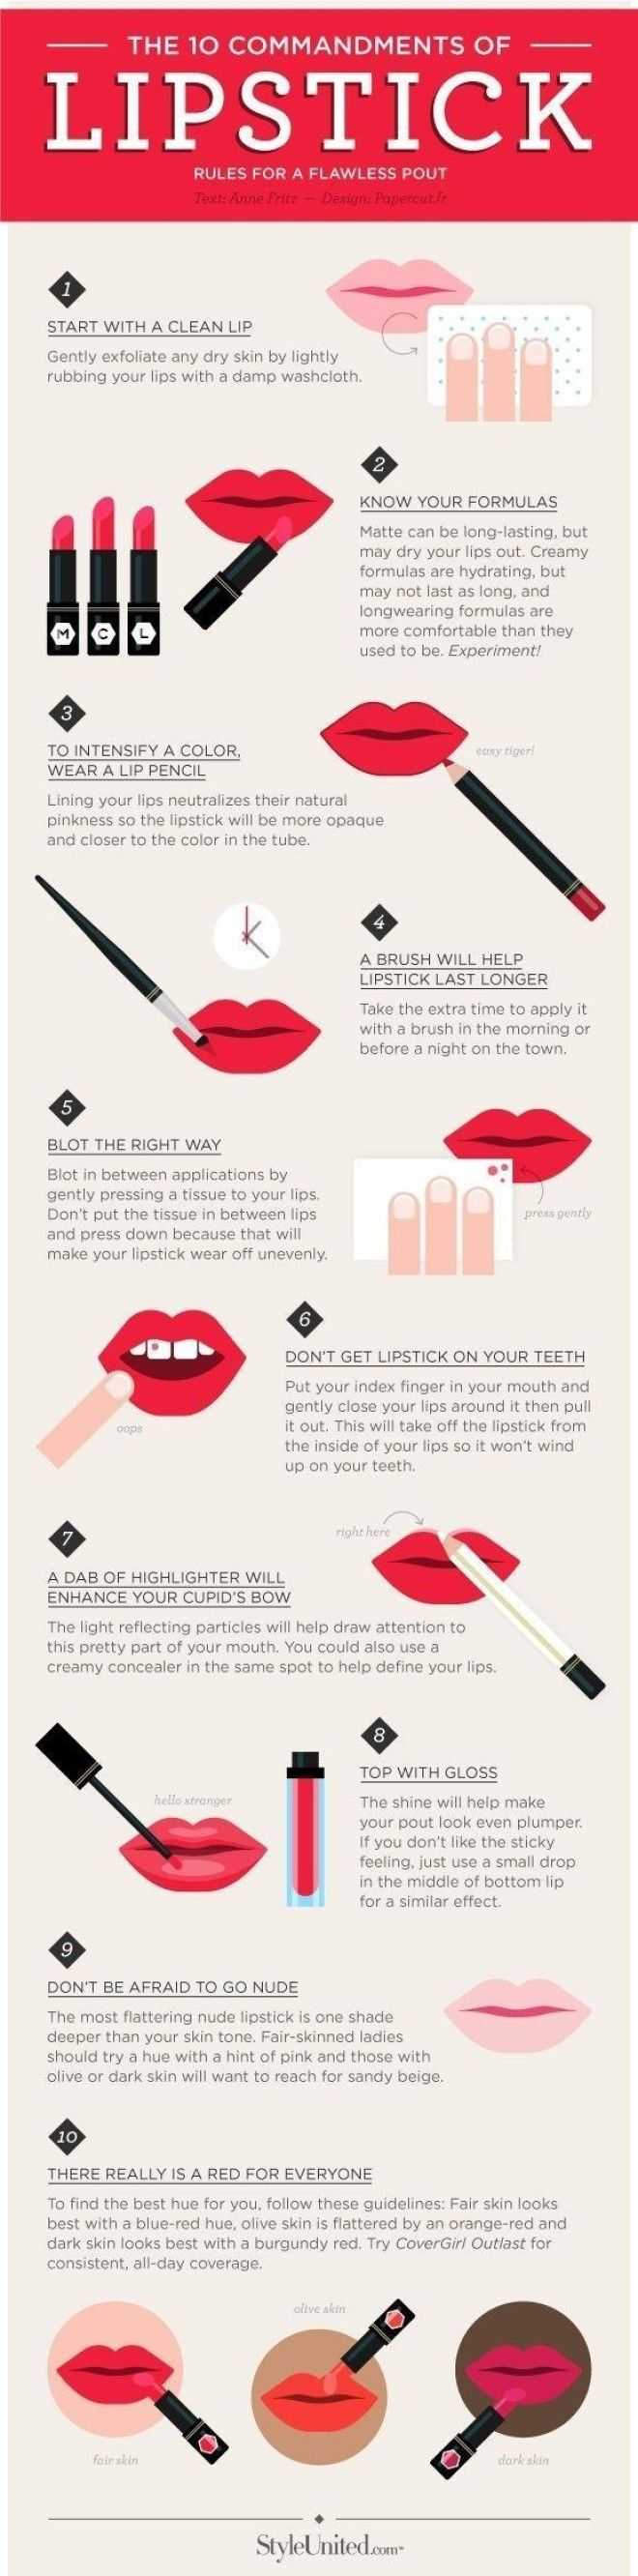 Lipstick 101